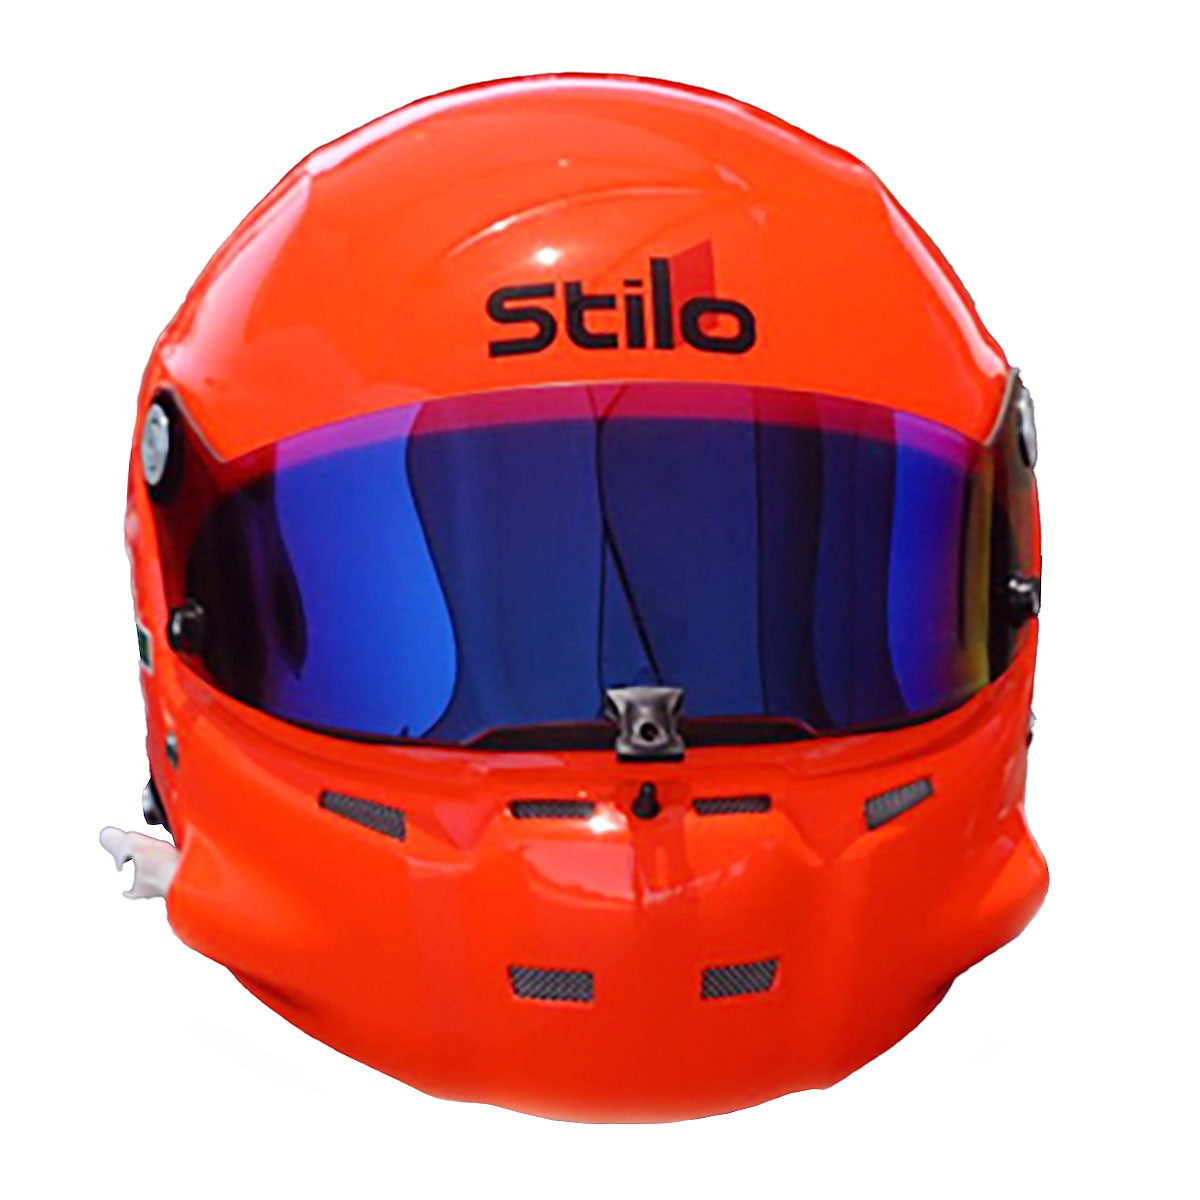 "Explore the Stilo ST5.1 GT Offshore Helmet - Perfect for Racing Adventures"